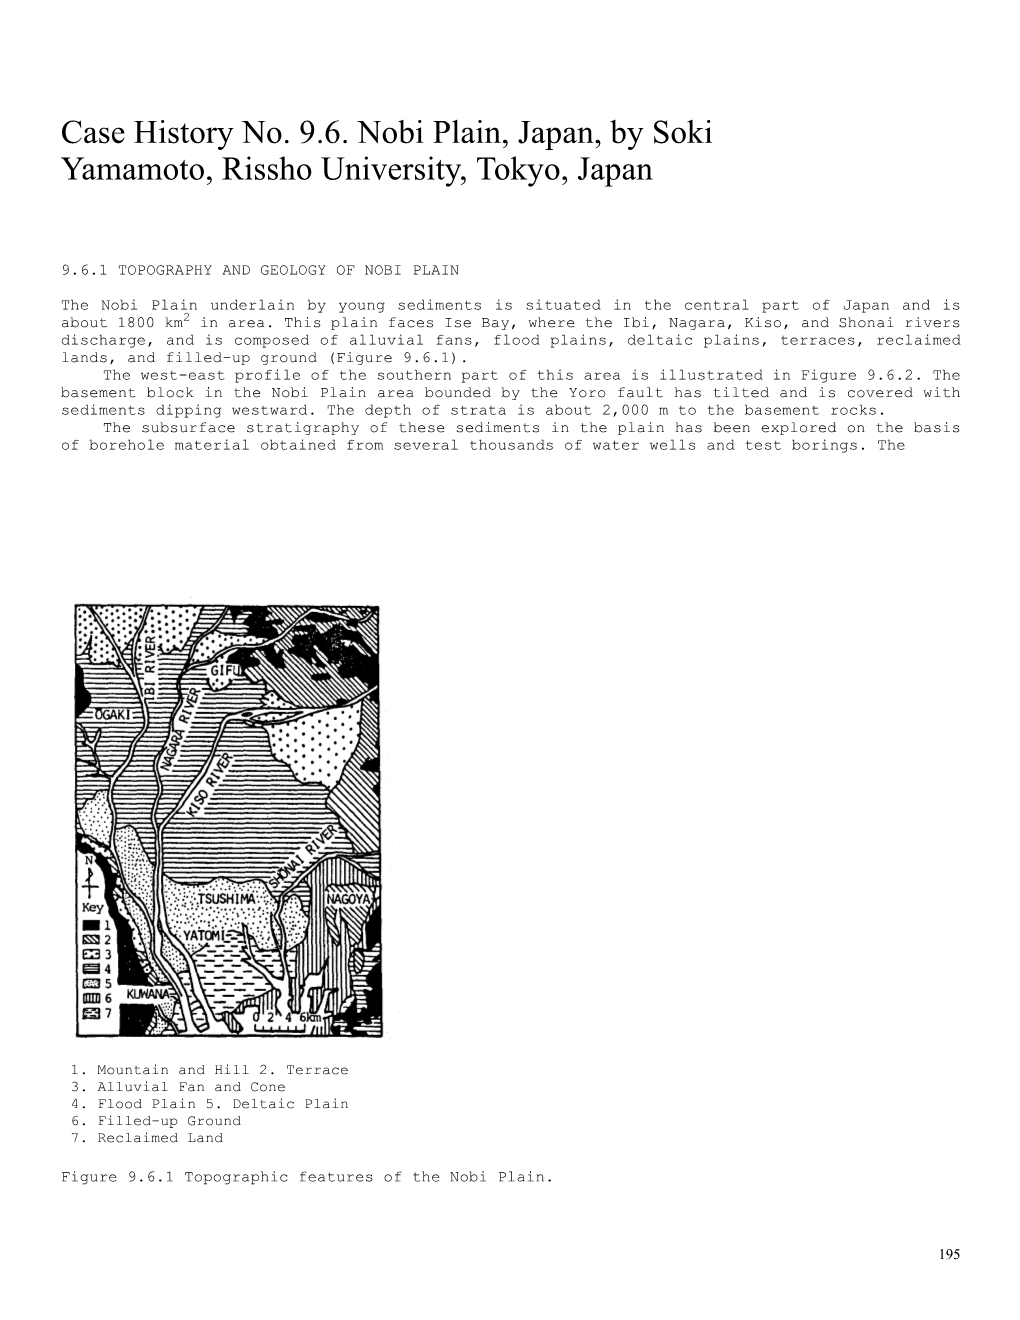 Case History No. 9.6. Nobi Plain, Japan, by Soki Yamamoto, Rissho University, Tokyo, Japan